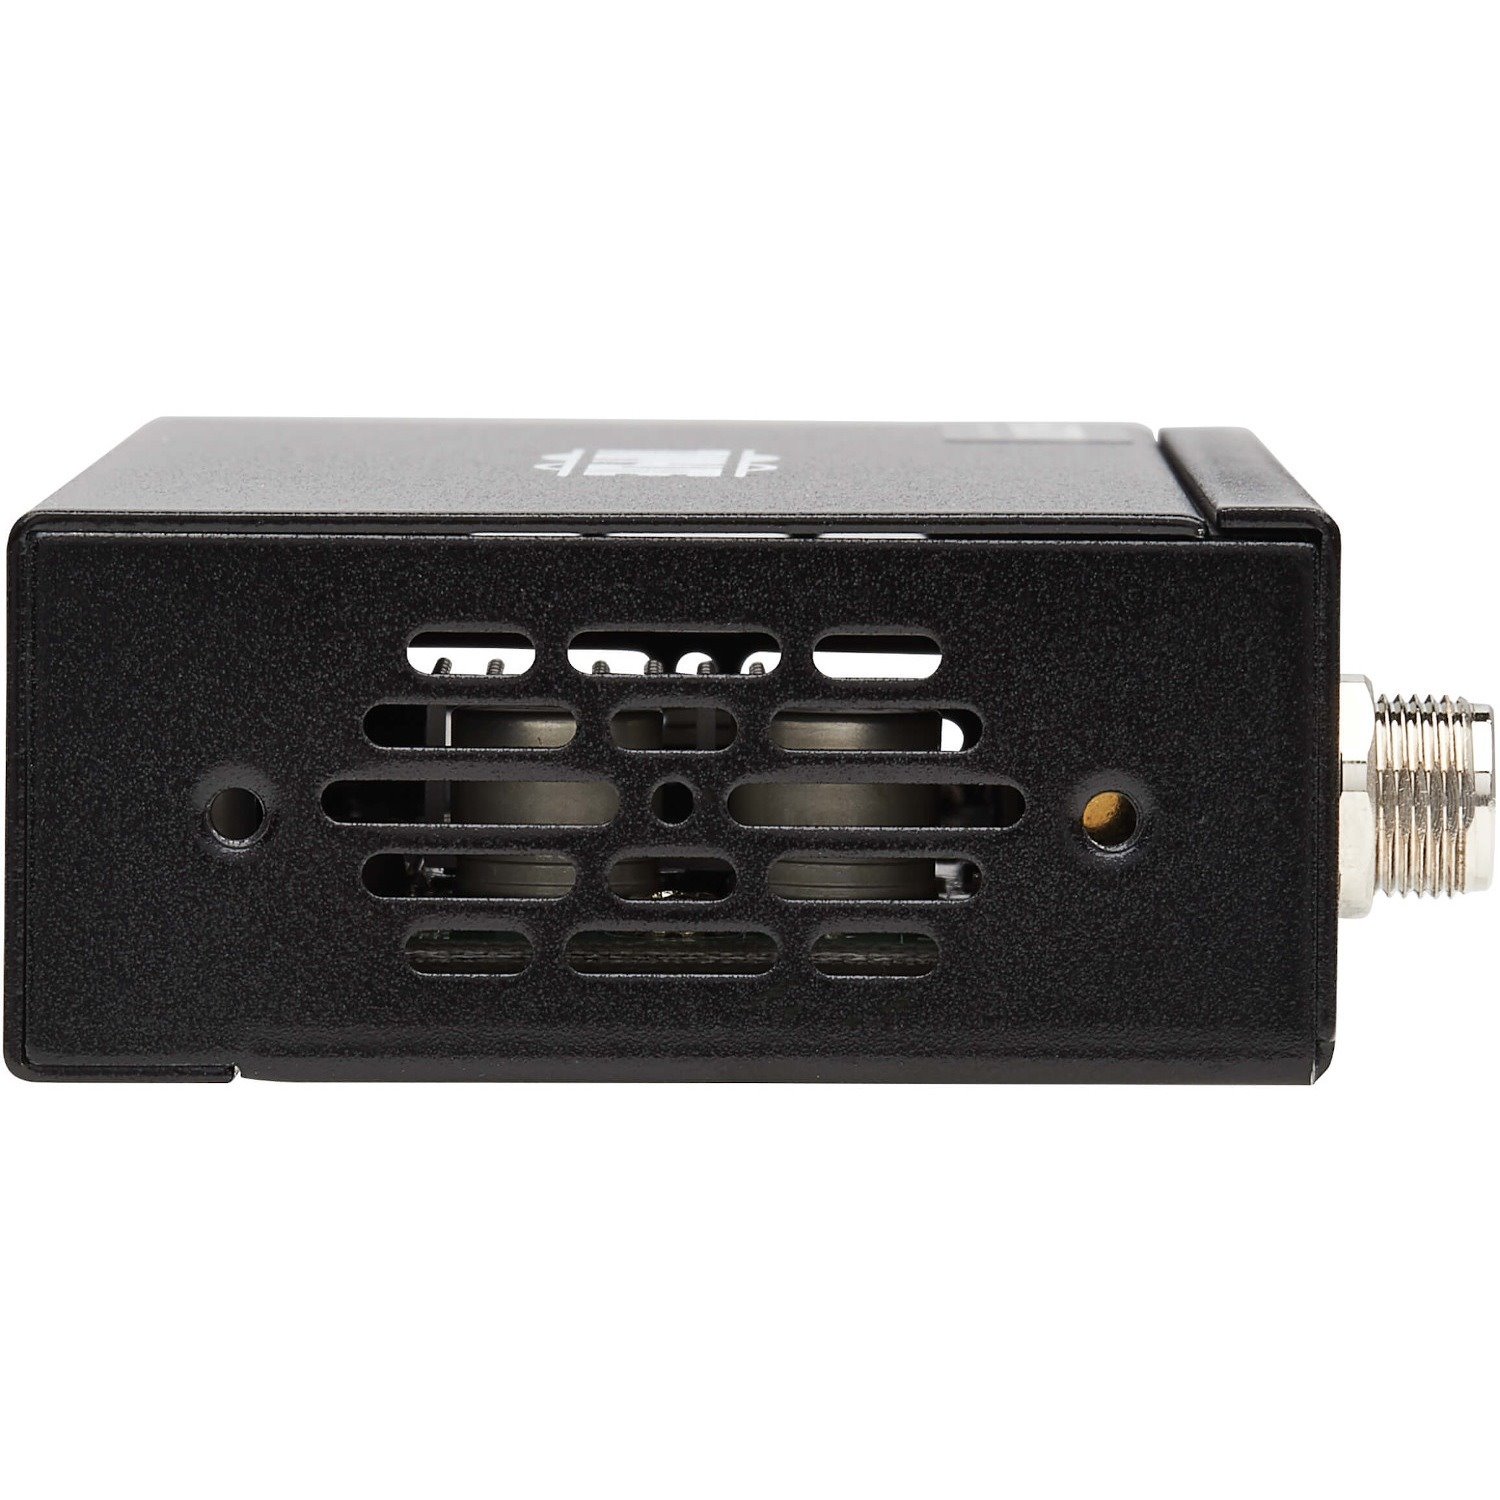 Tripp Lite by Eaton 2-Port HDMI over Cat6 Splitter - 4K 60 Hz, HDR, 4:4:4, PoC, HDCP 2.2, 230 ft. (70.1 m), TAA